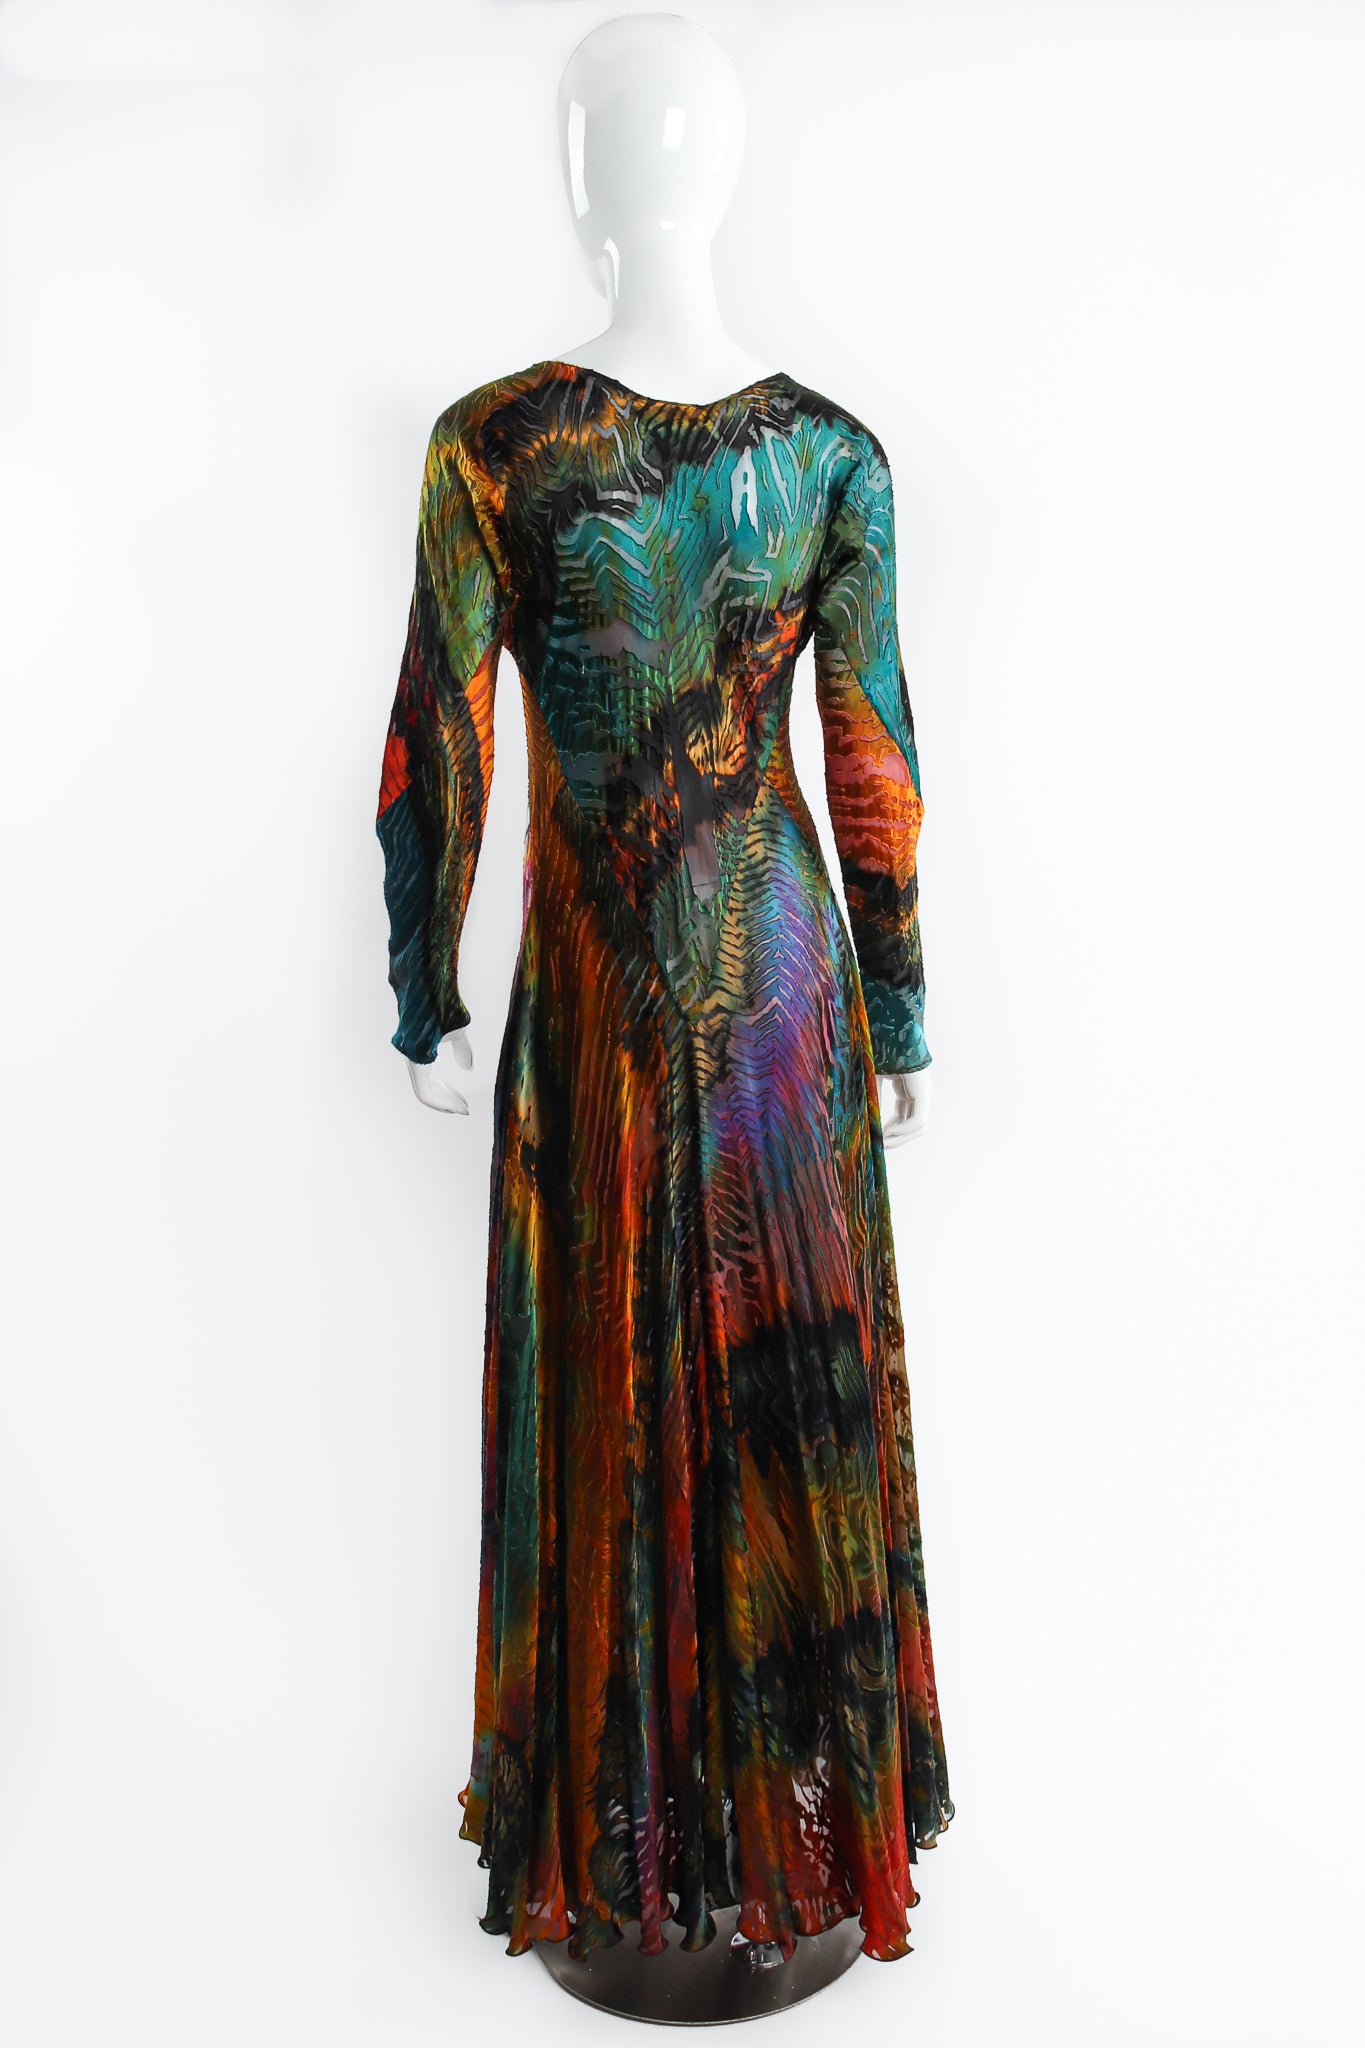 Carter Smith Hand Dyed Silk Animal Print Burnout Bias Dress on Mannequin Back at Recess LA